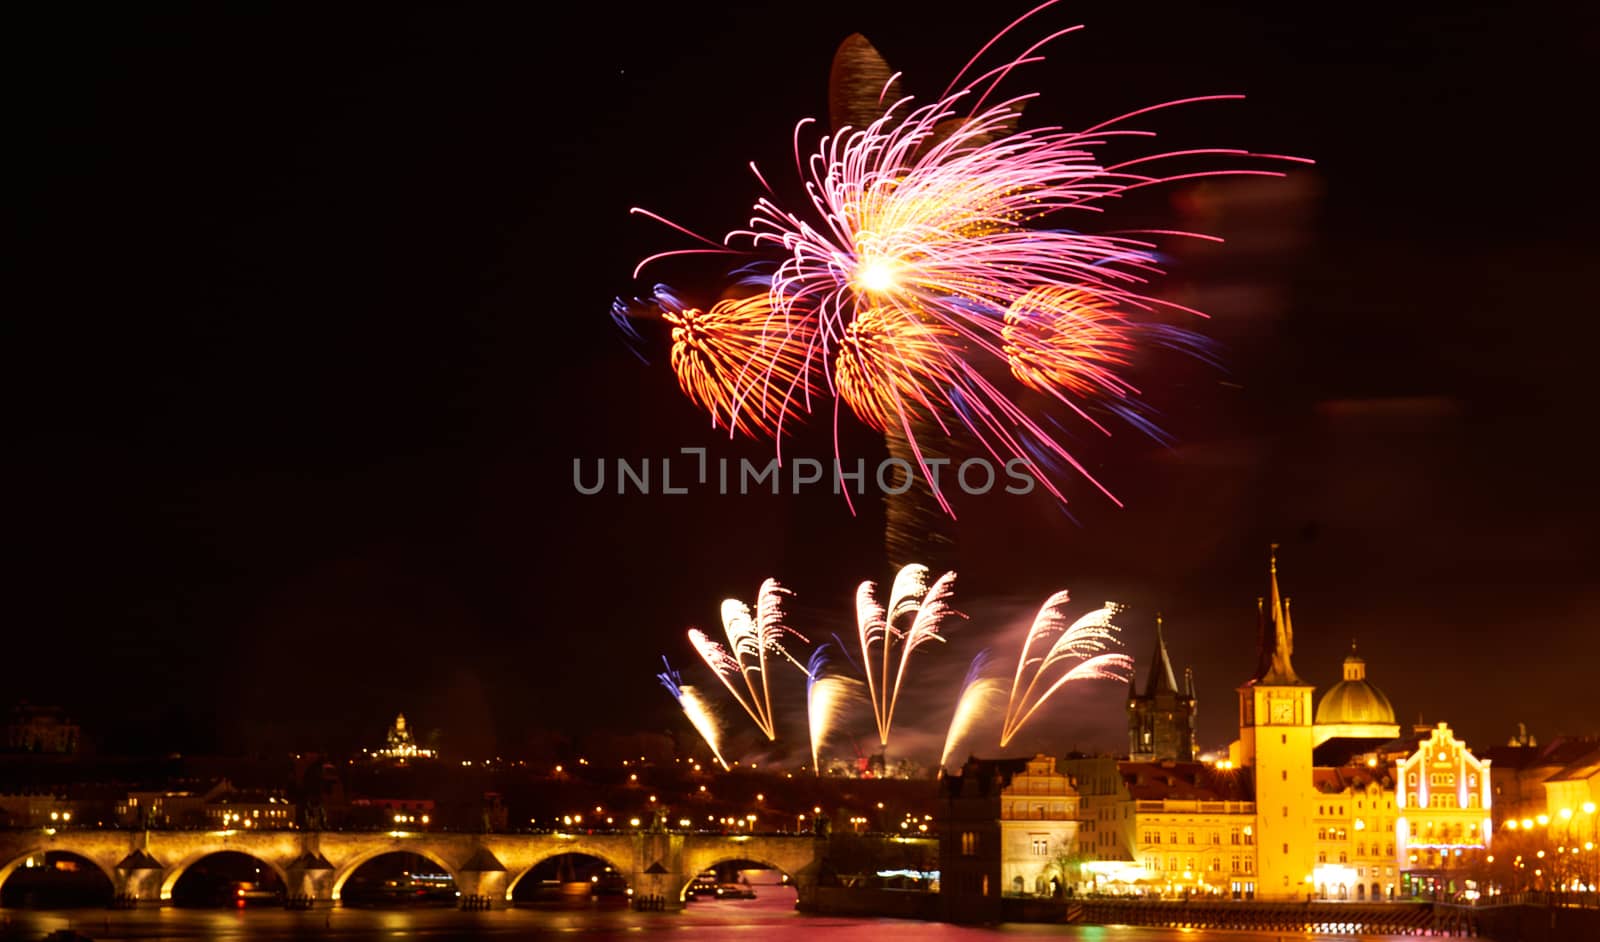 2019 New Year Firework Show over Prague by Jindrich_Blecha